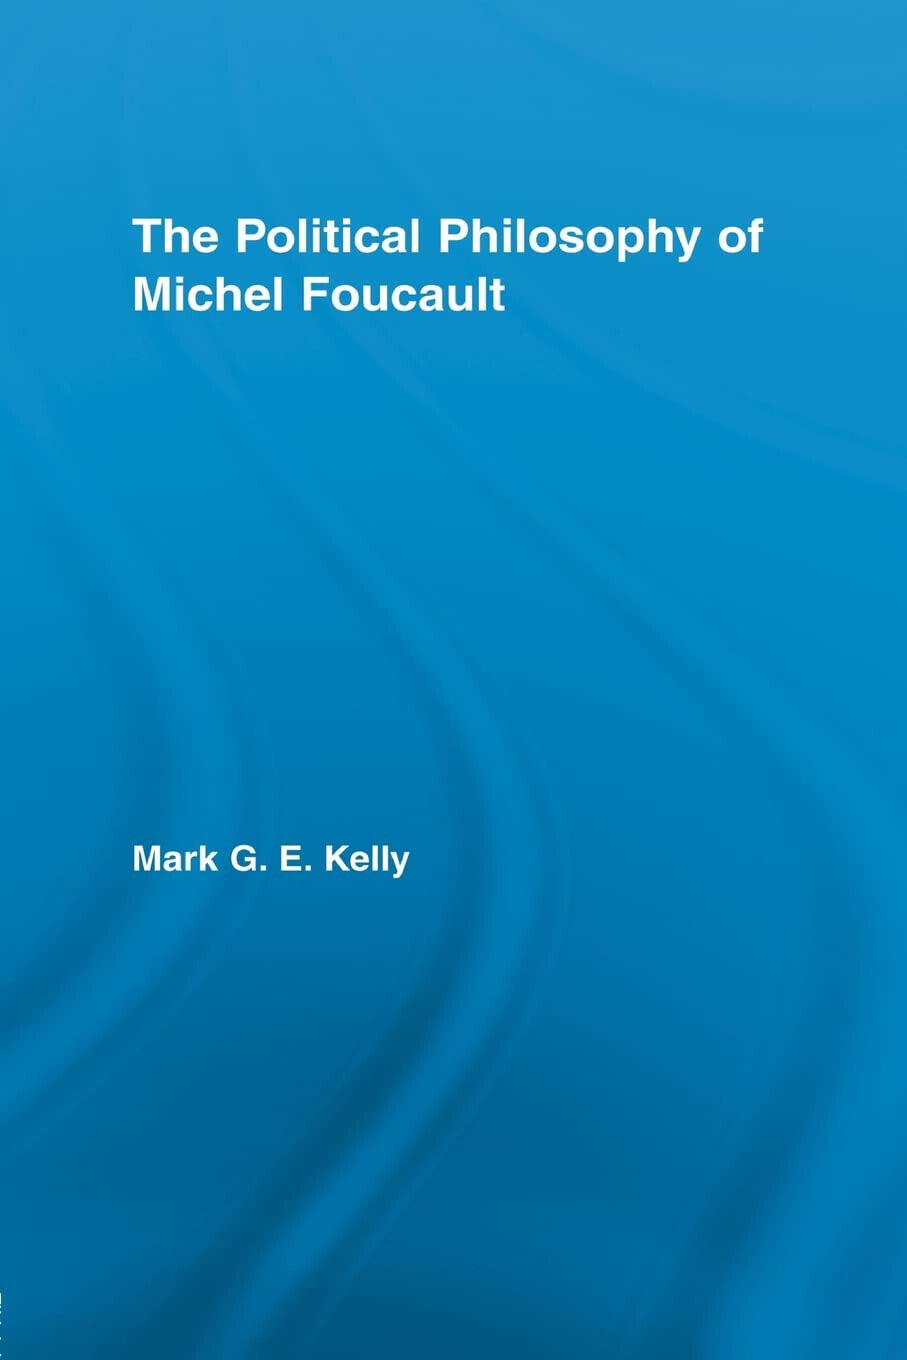 The Political Philosophy of Michel Foucault - Mark G. E. Kelly - Routledge, 2012 libro usato